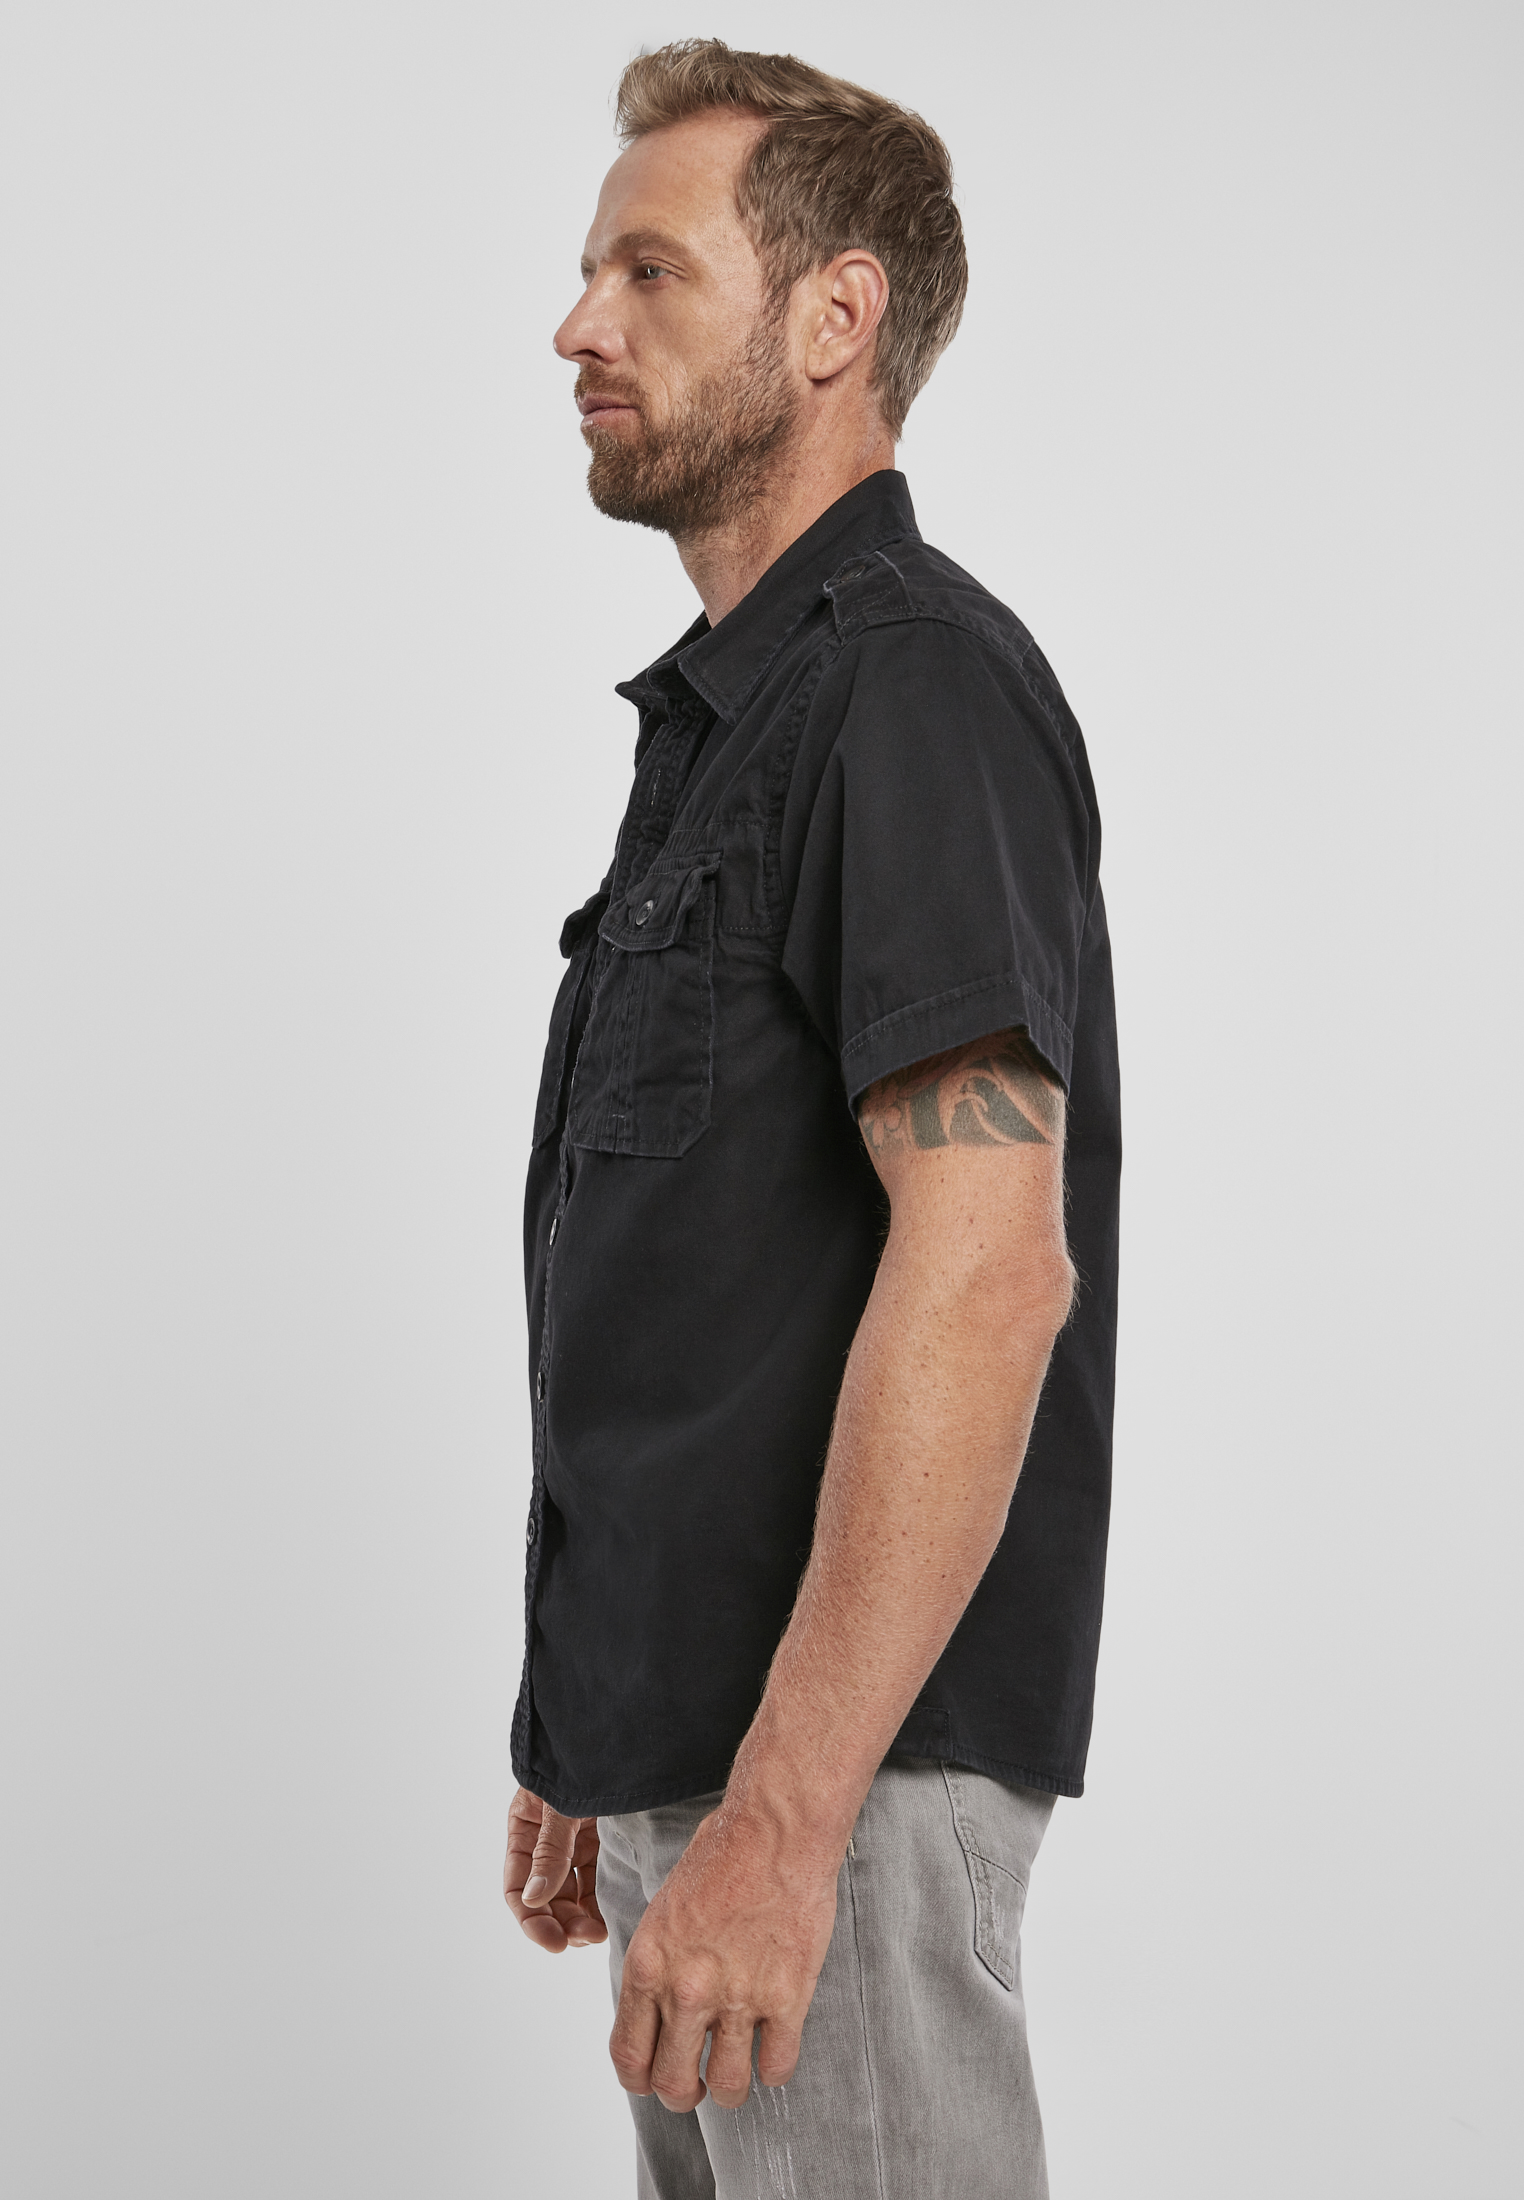 Hemden Vintage Shirt shortsleeve in Farbe black